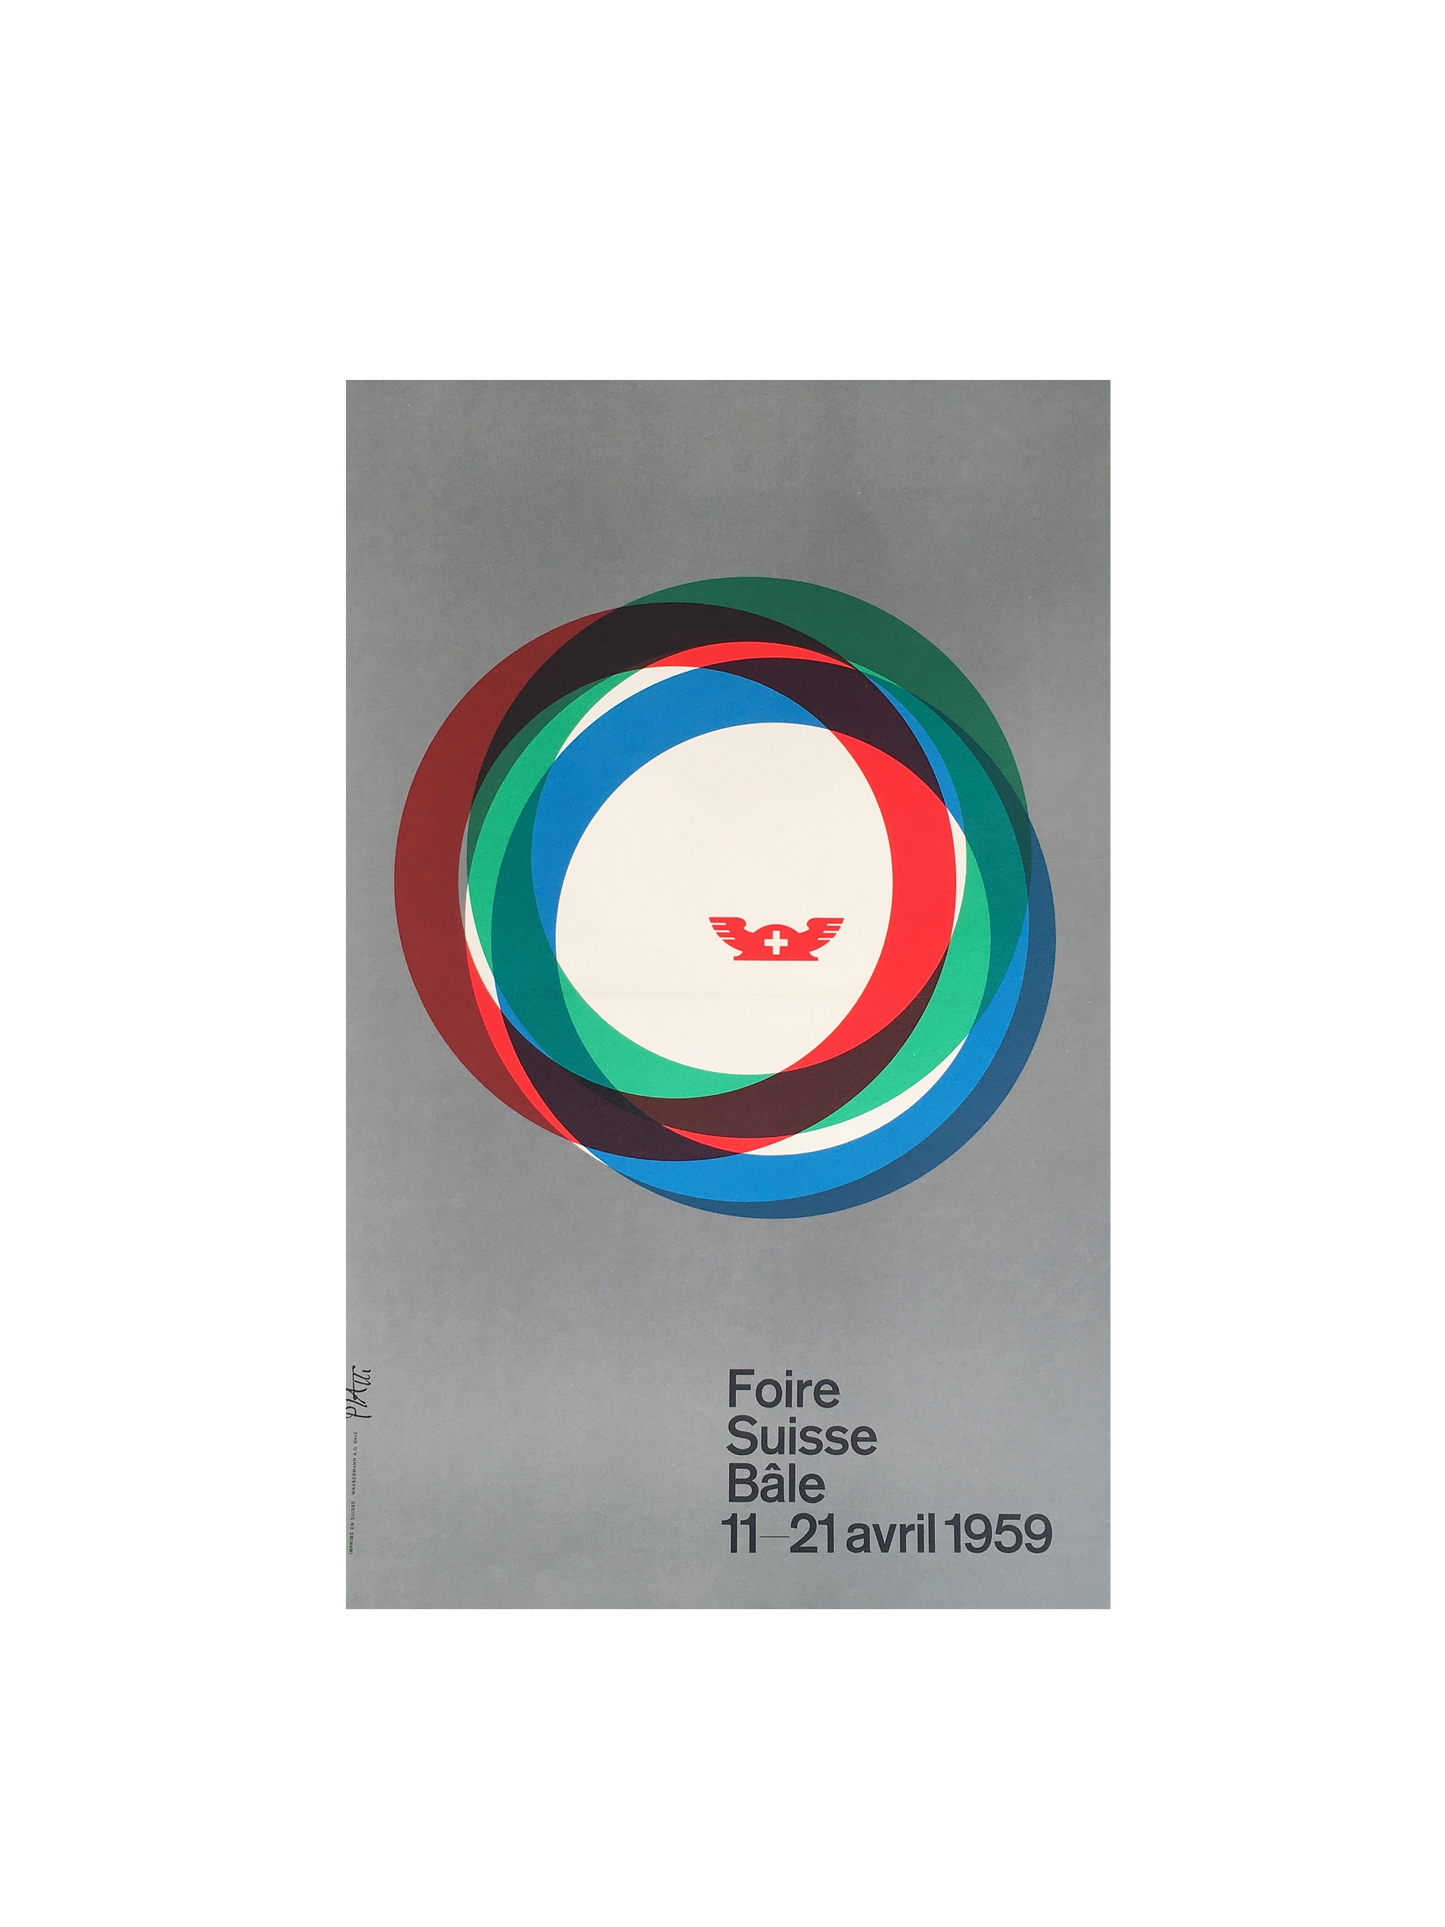 Foire Suisse Bale by Piatti